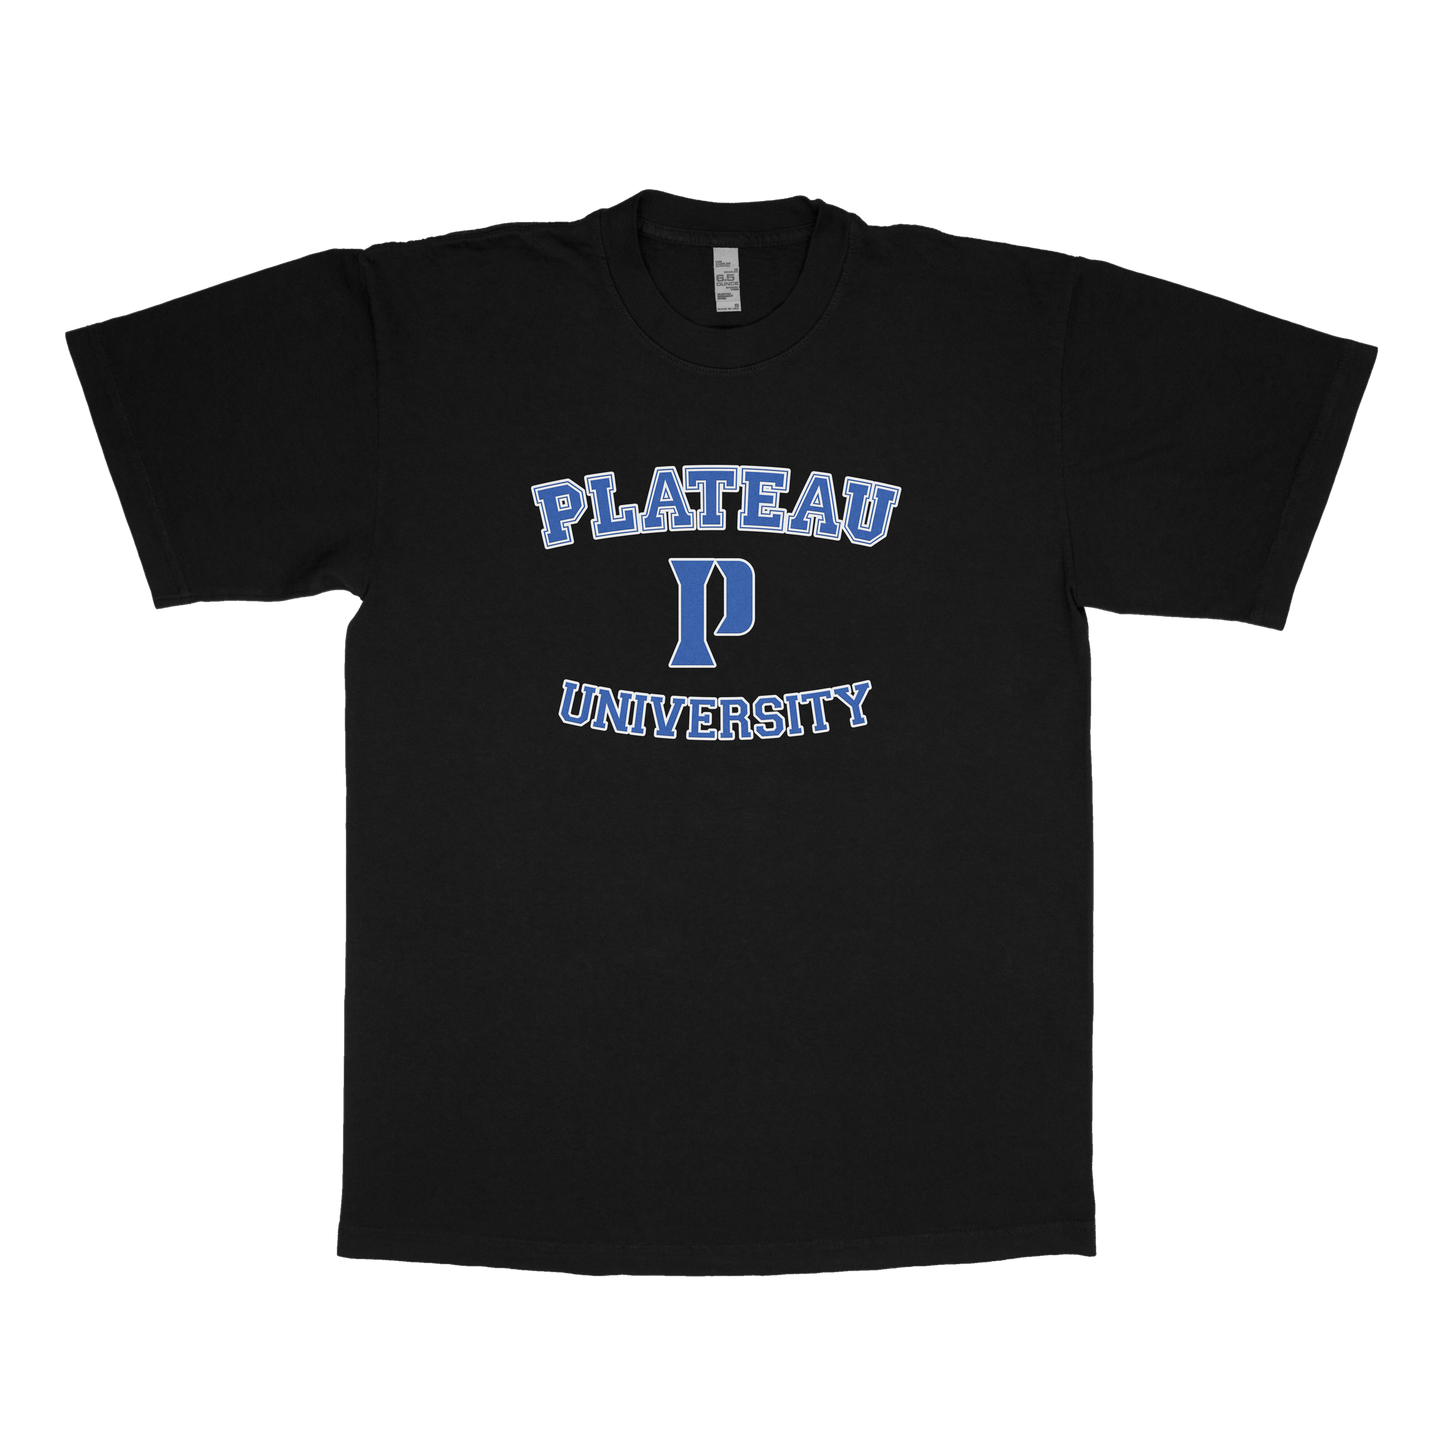 Plateau University (FAKE U)